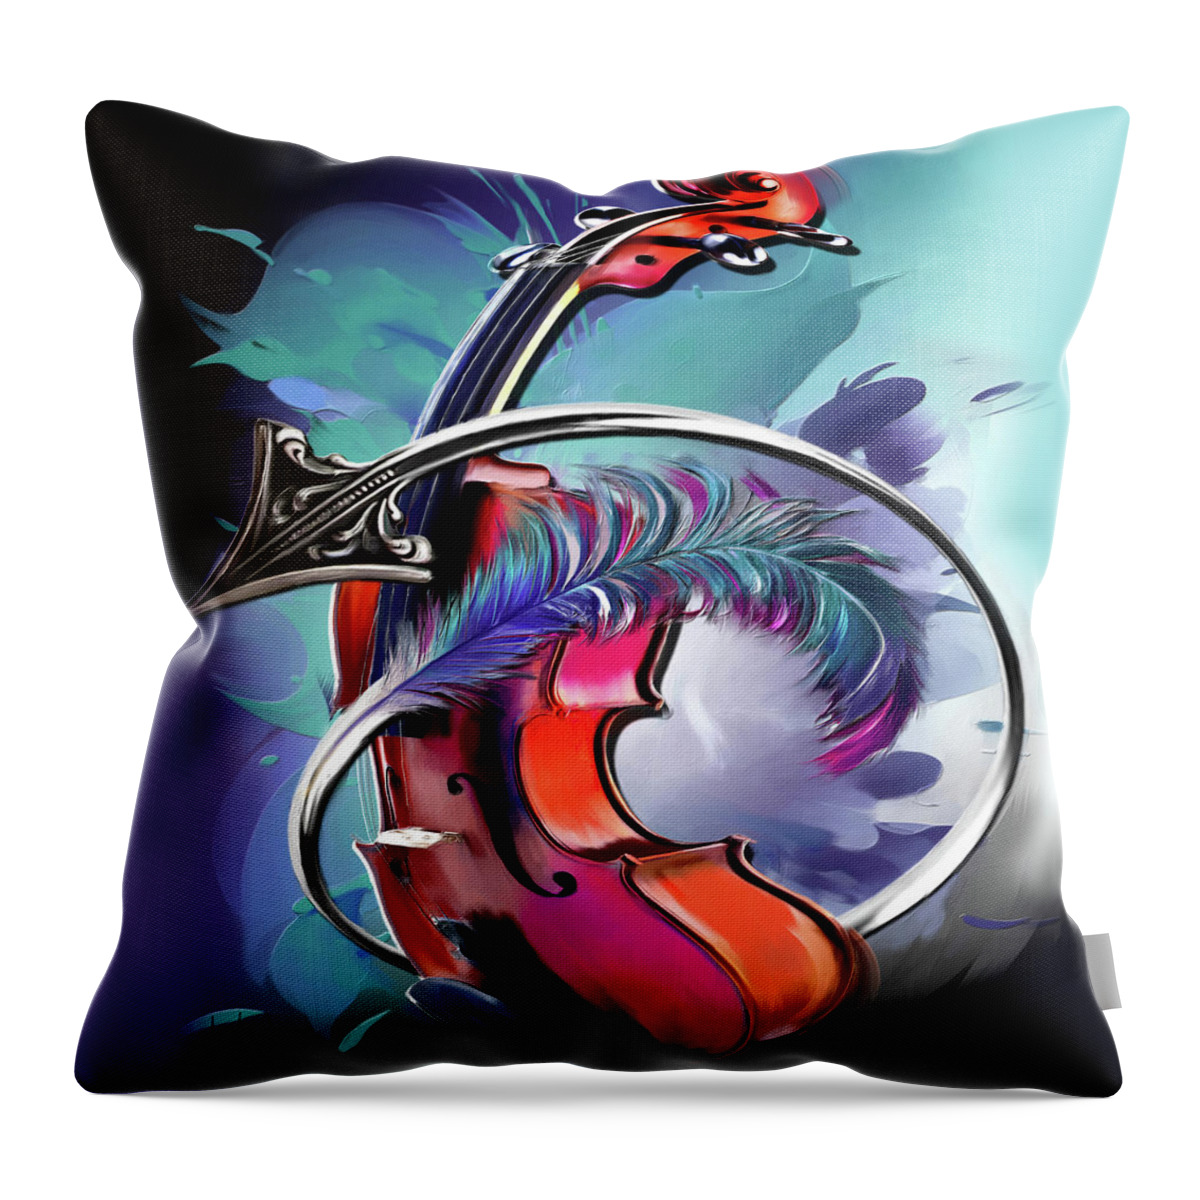 Sagittarius Throw Pillow featuring the mixed media Sagittarius by Melanie D